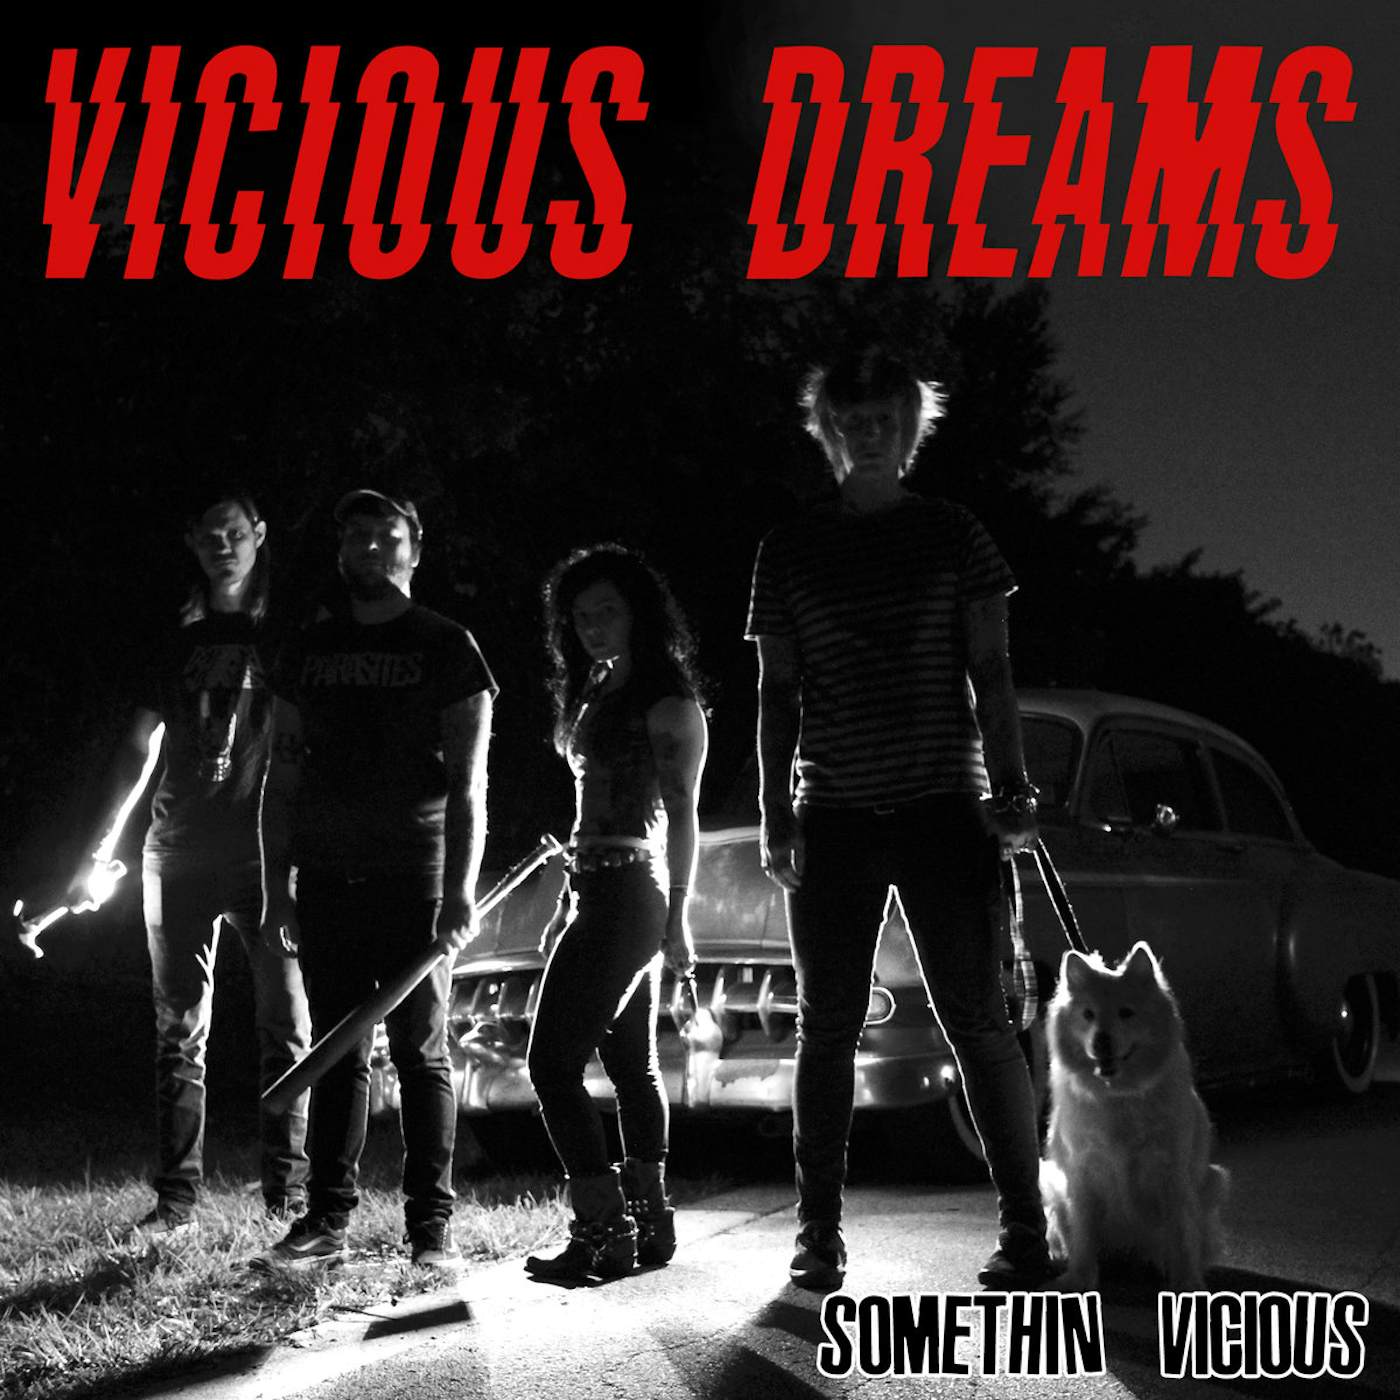 Vicious Dreams Somethin' Vicious Vinyl Record